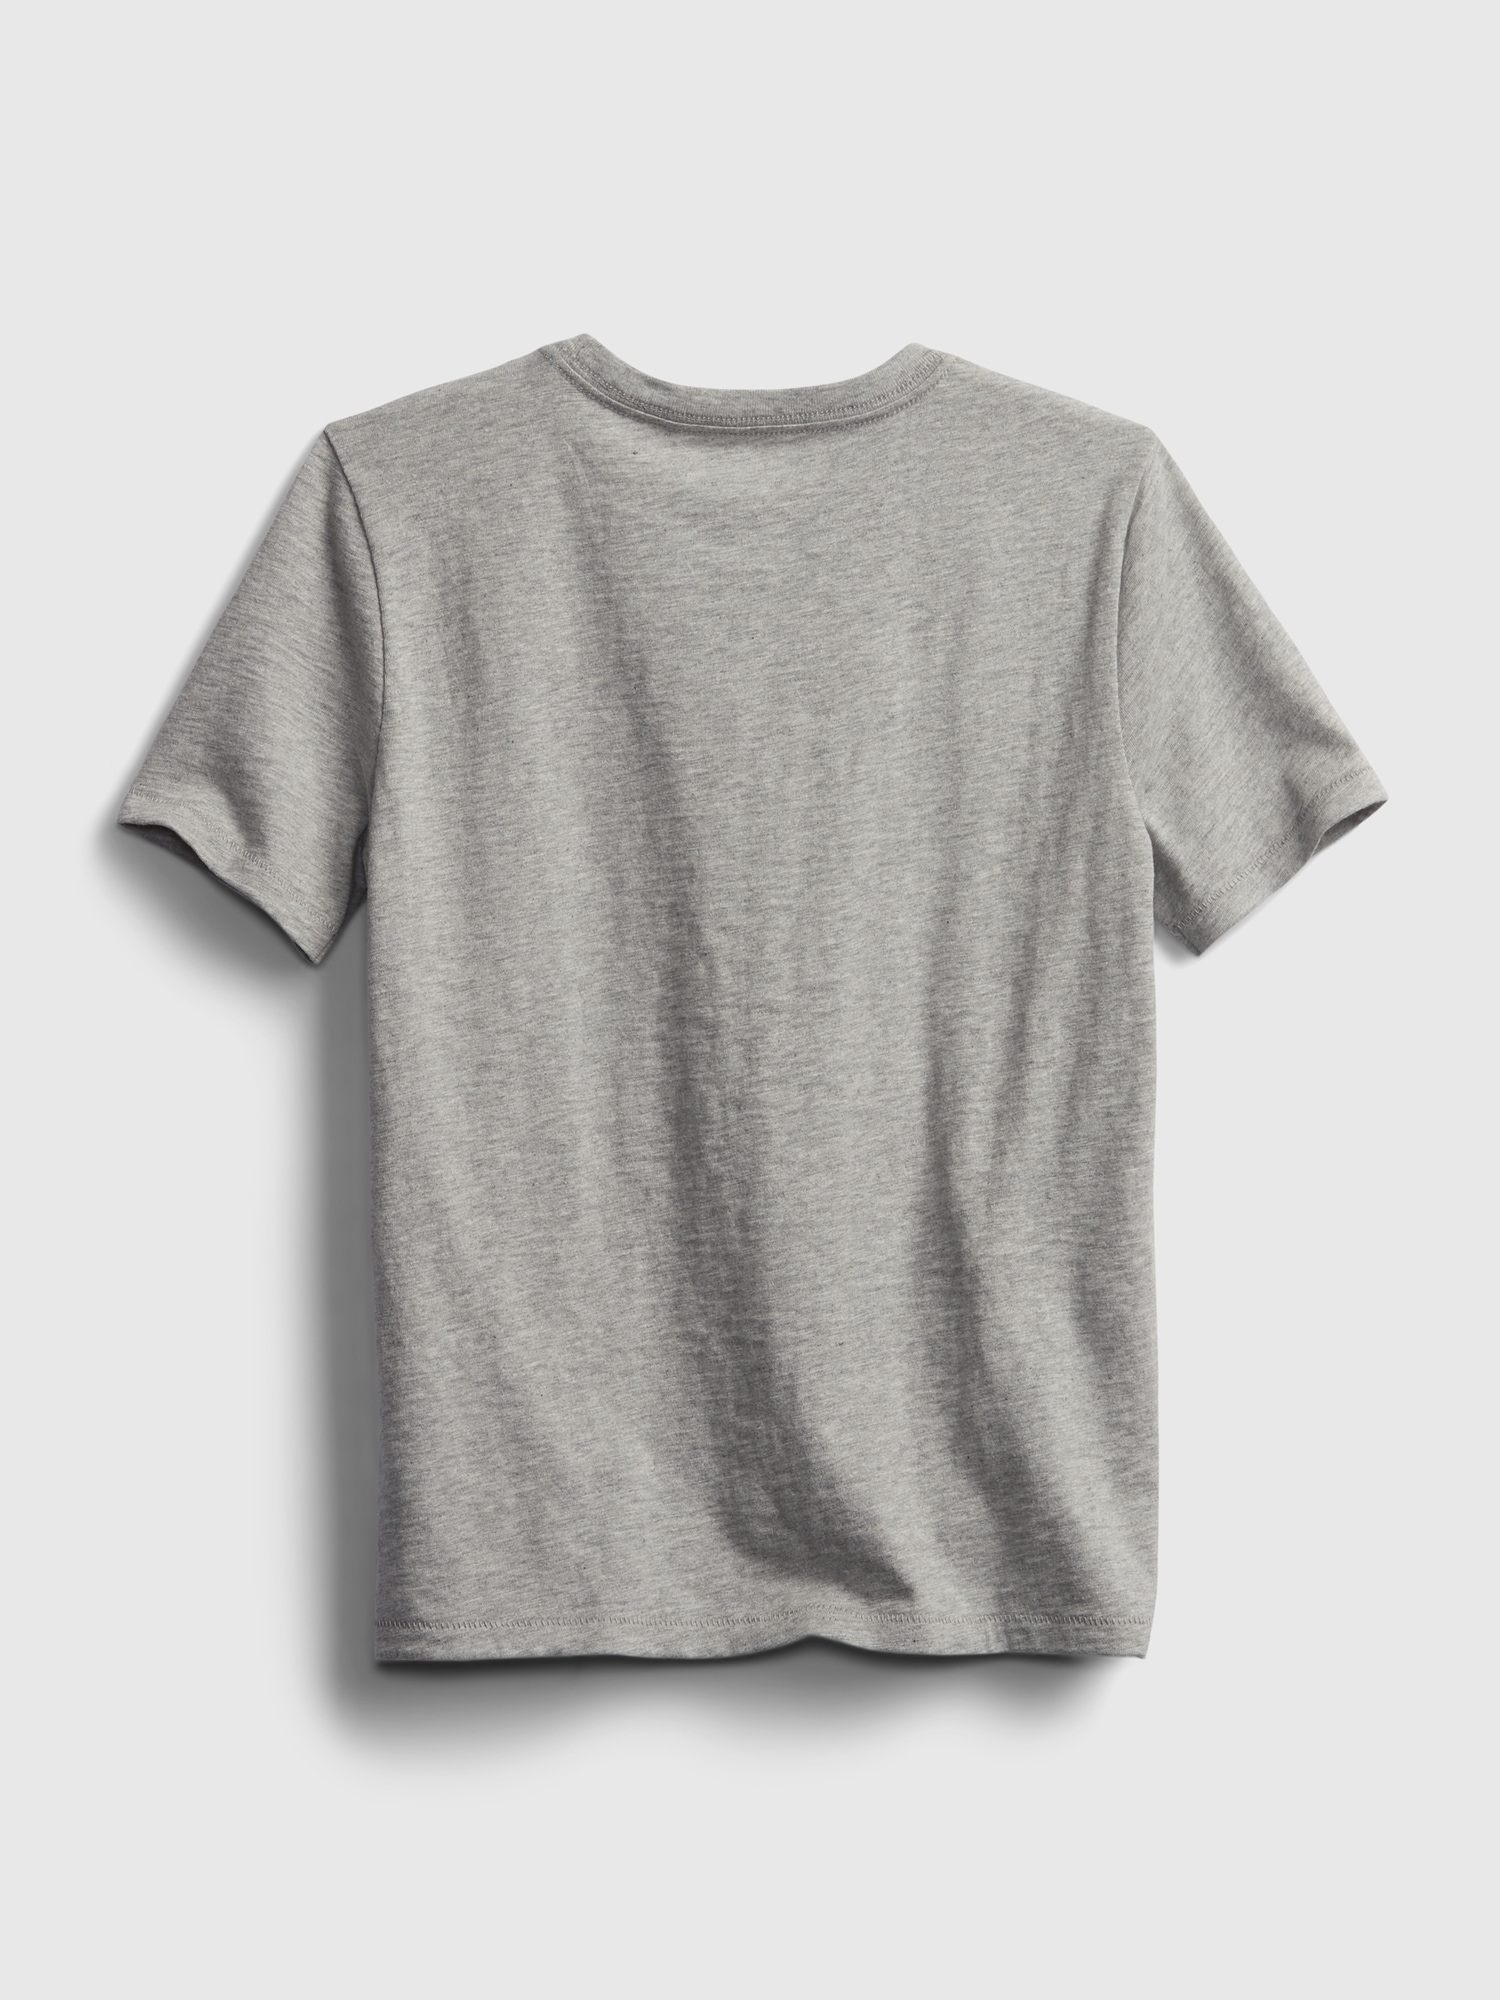 Kids Organic Cotton T-Shirt | Gap